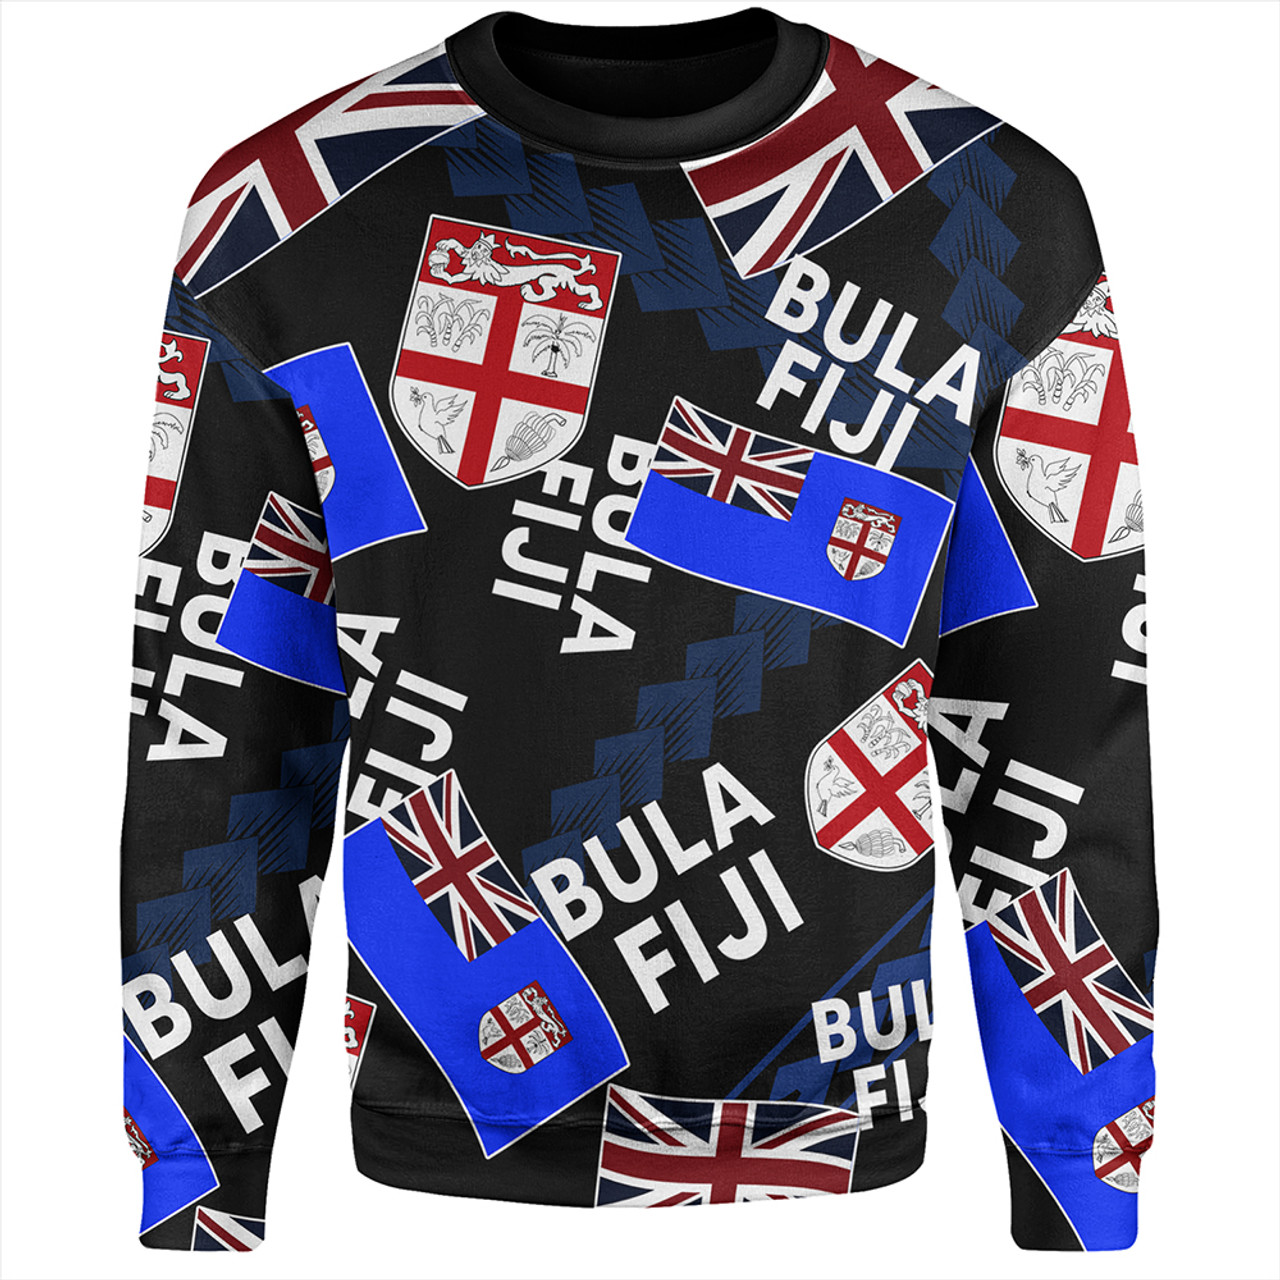 Fiji Sweatshirt Flag Outfit Free Style